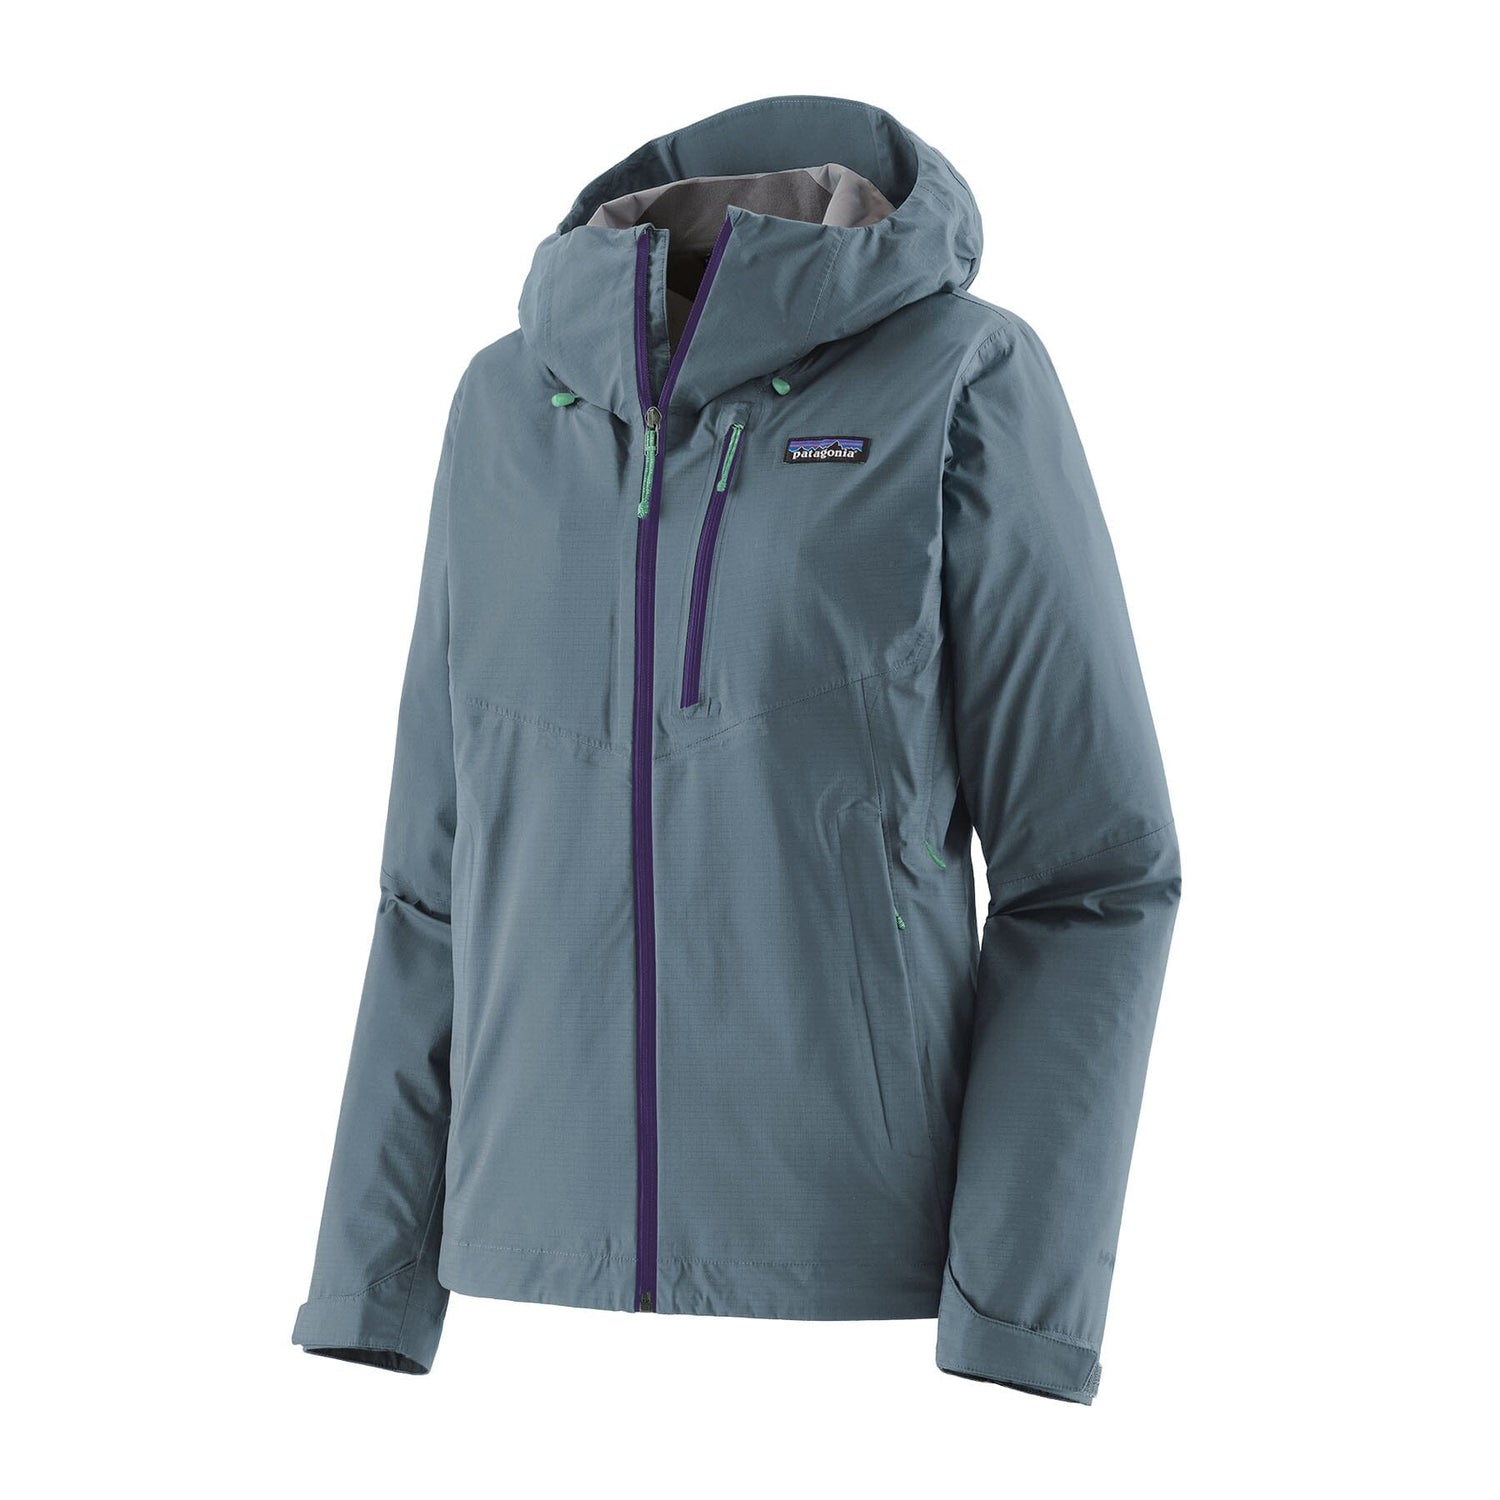 Patagonia - W's Granite Crest Shell Jacket - 100% Recycled Nylon - Weekendbee - sustainable sportswear